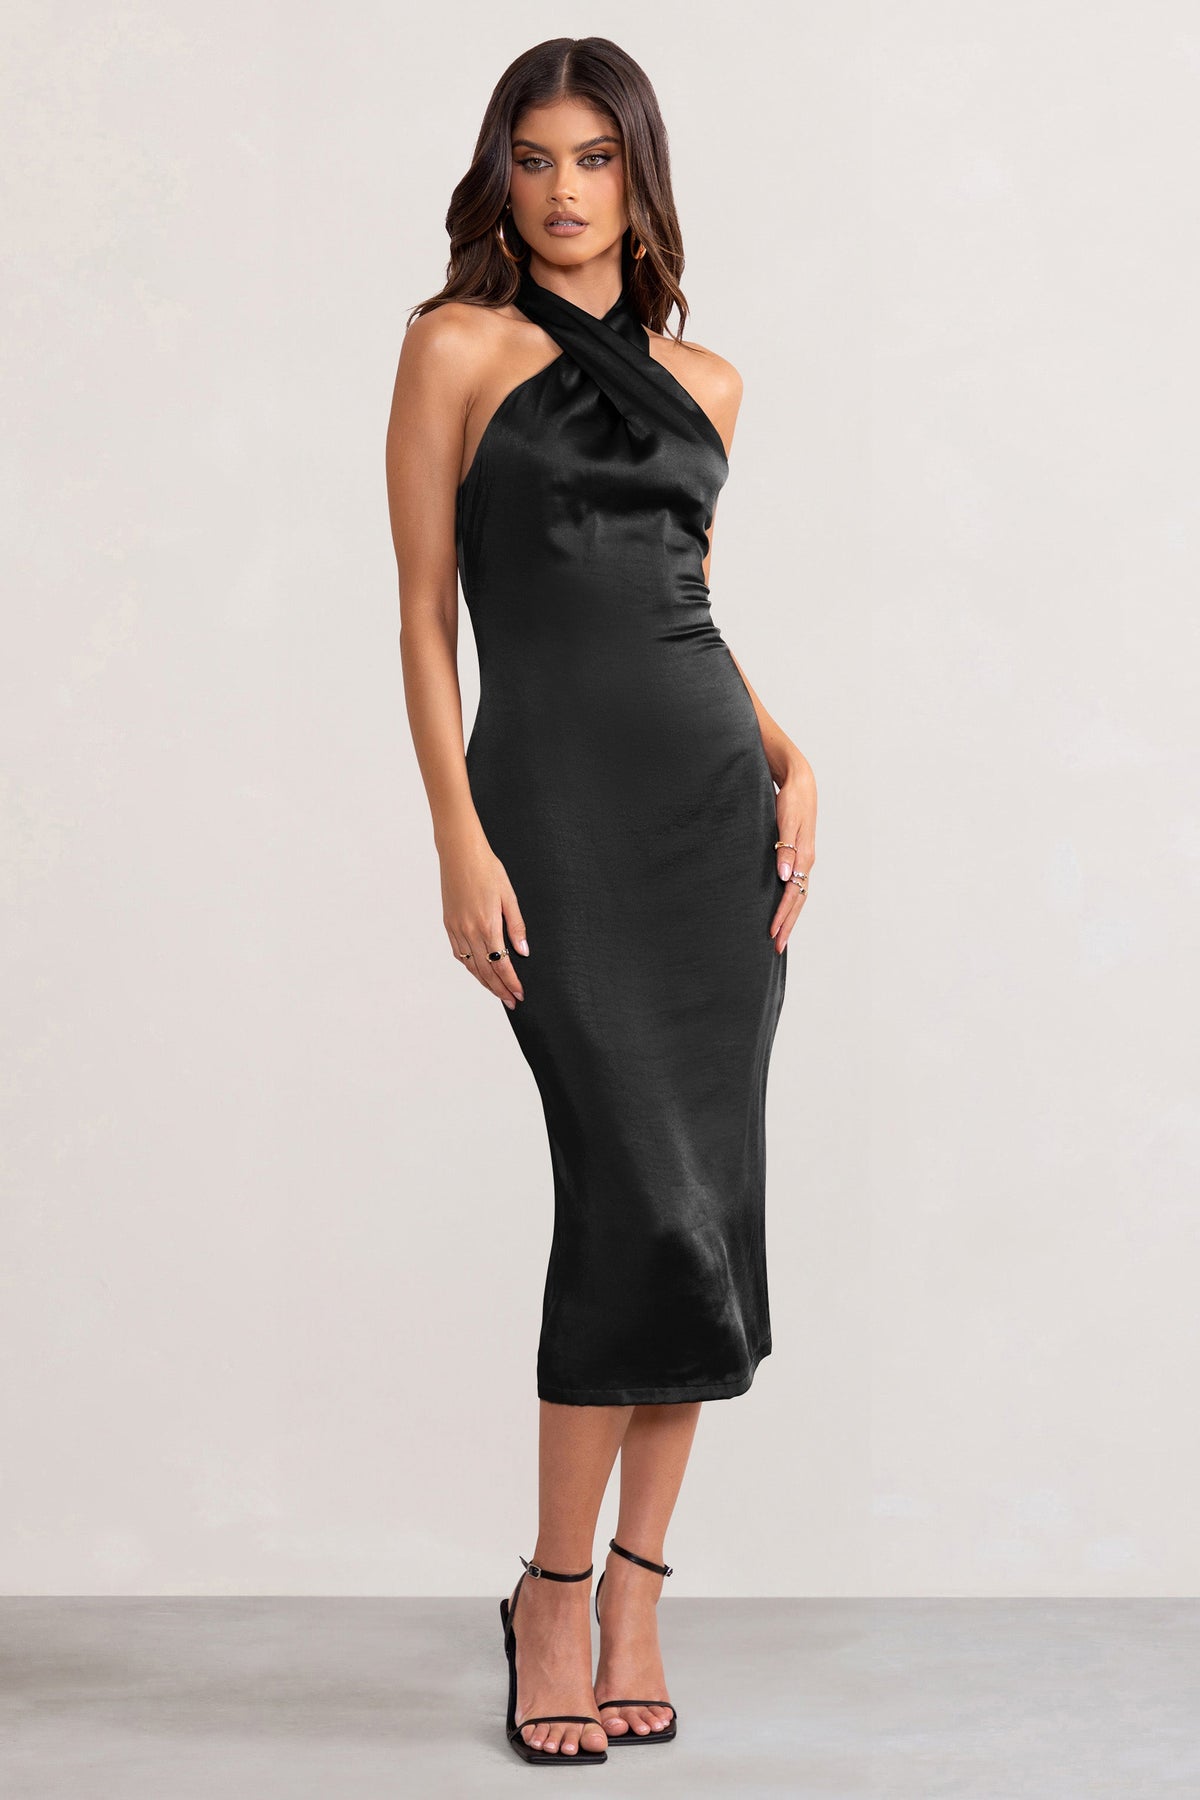 Black Satin Vest Style Halter Bodycon Dress